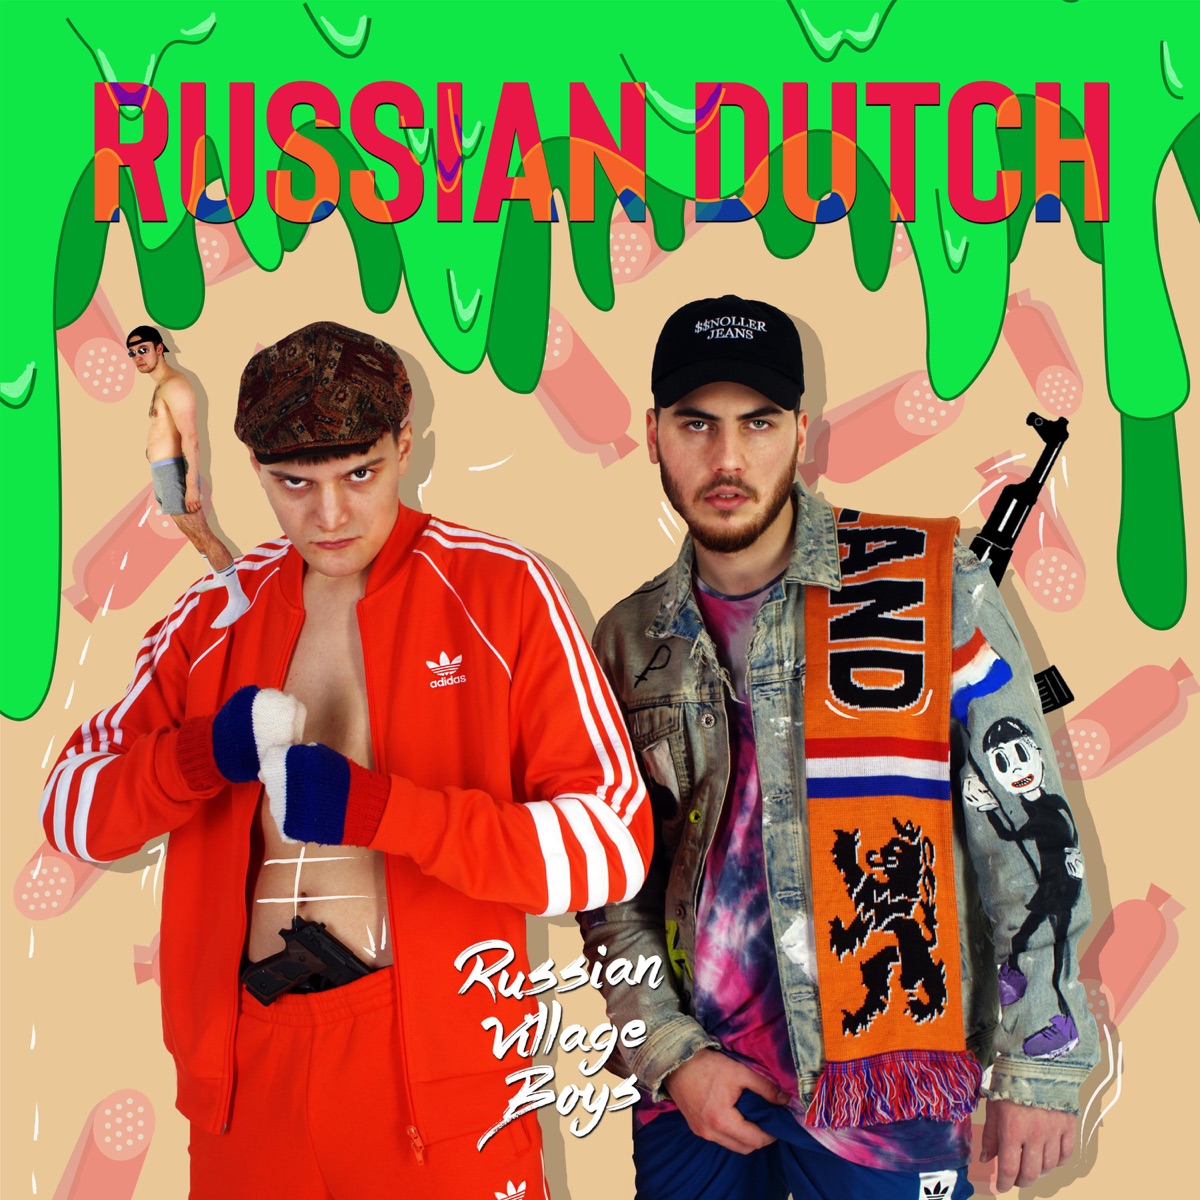 Respectvol sterk aanvaarden Adidas - Single by Russian Village Boys & Mr. Polska on Apple Music